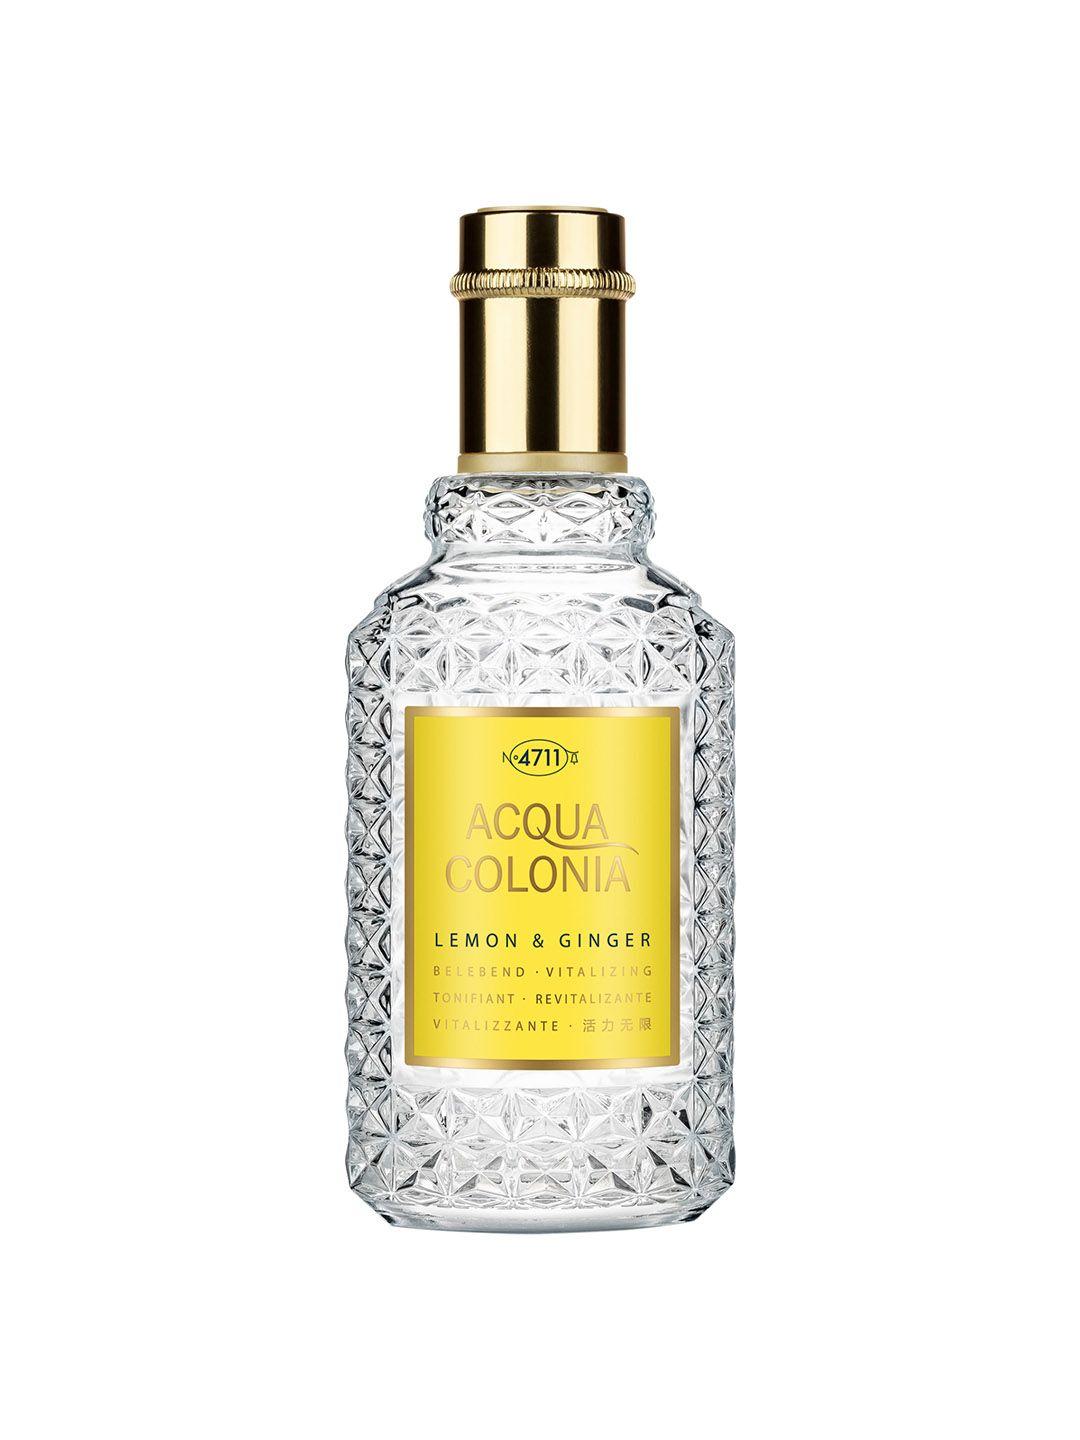 4711 acqua colonia lemon & ginger eau de cologne - 50 ml